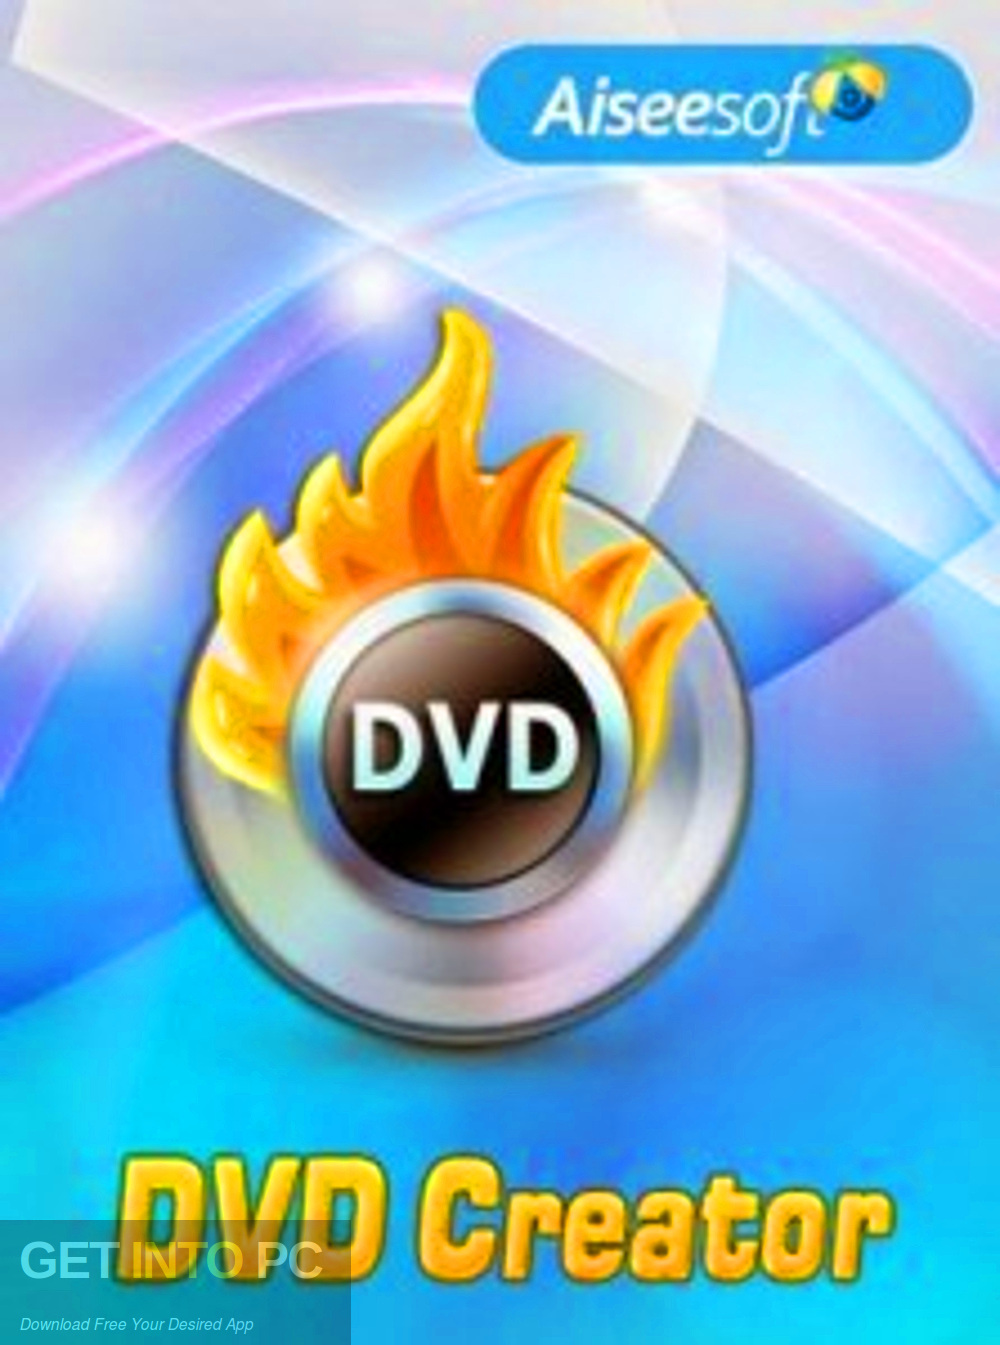 Aiseesoft DVD Creator Free Download GetintoPC.com